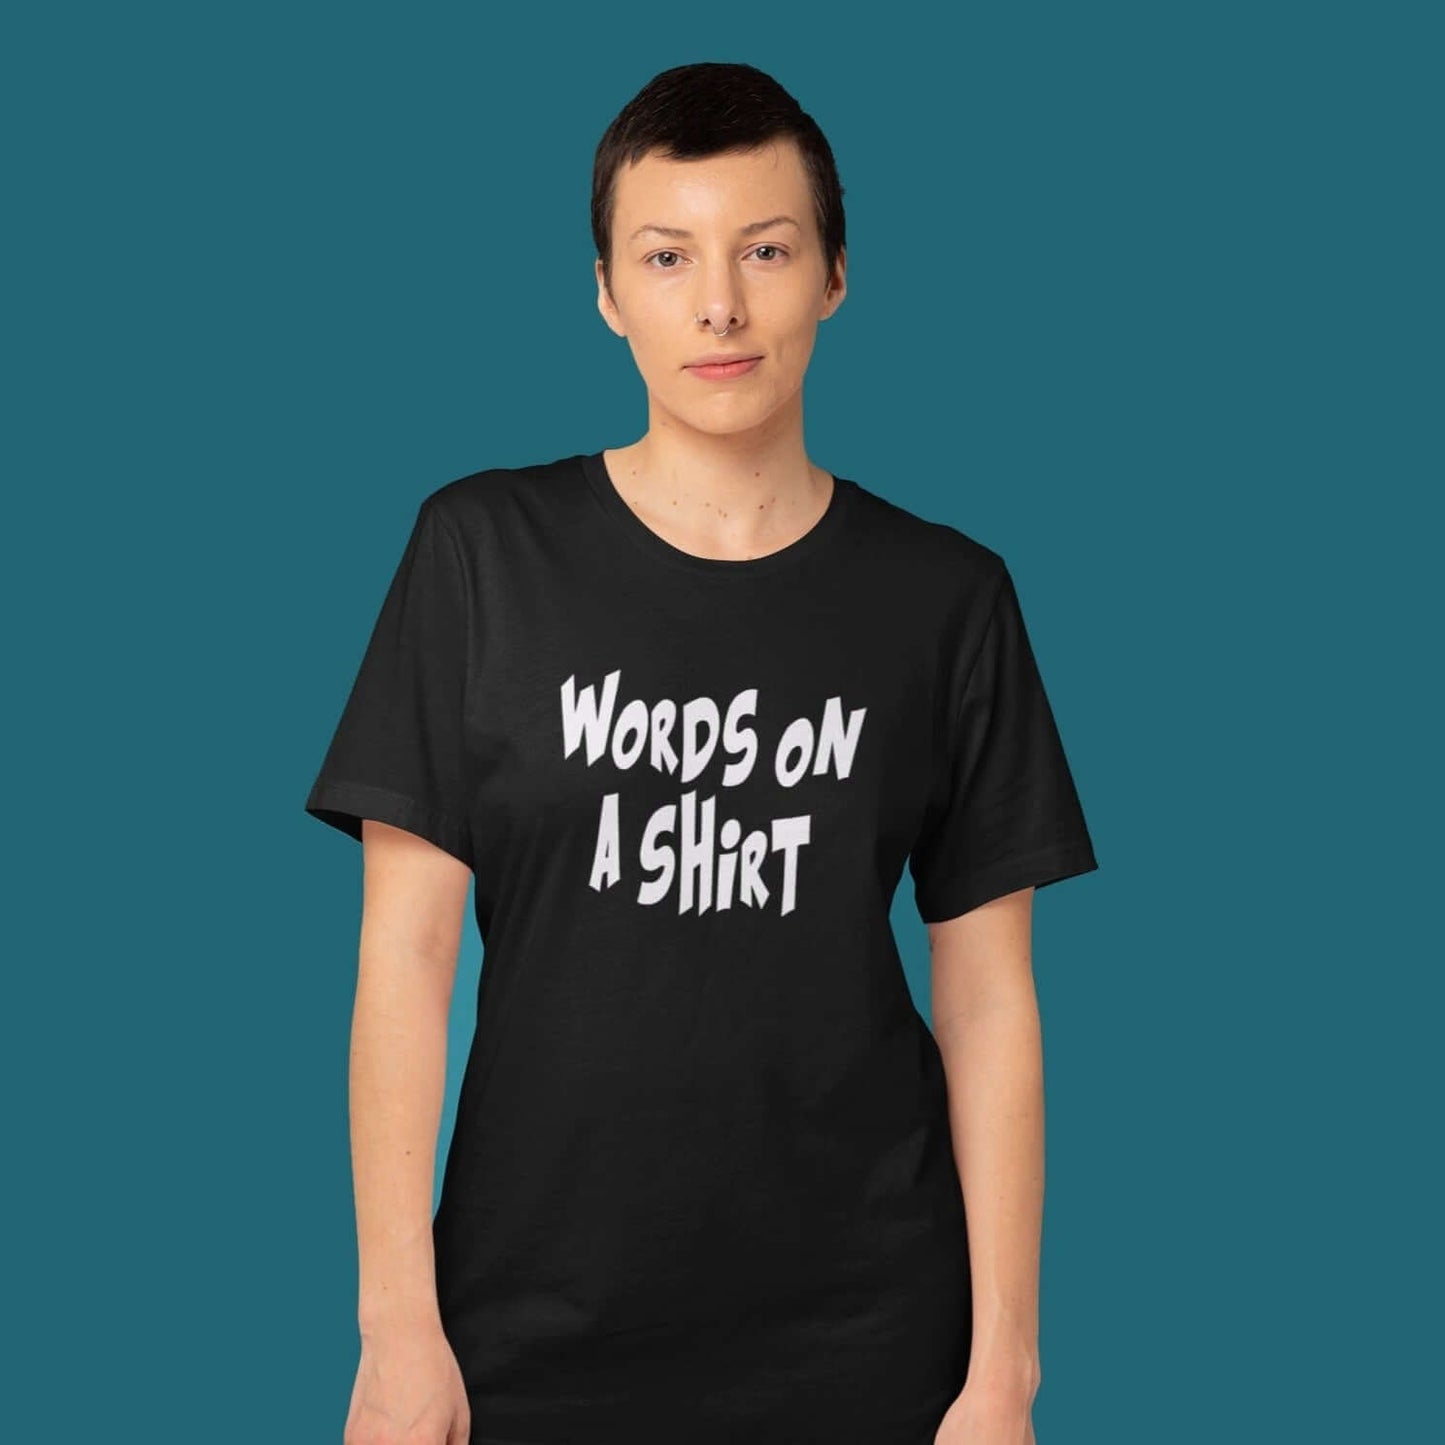 Words on a shirt T-shirt